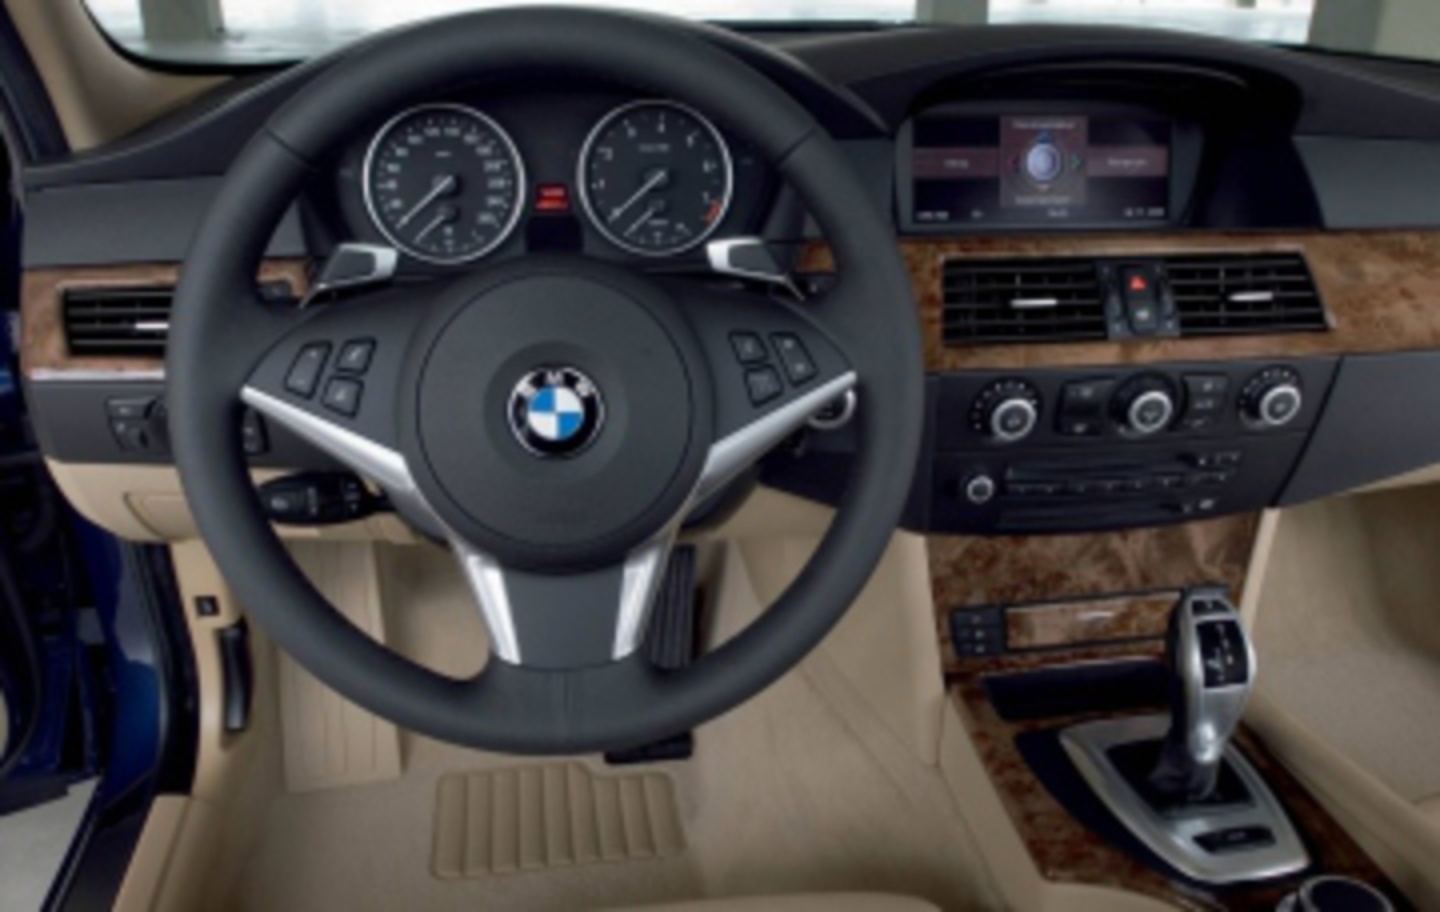 BMW 520d. This is the European-spec interior. Australian